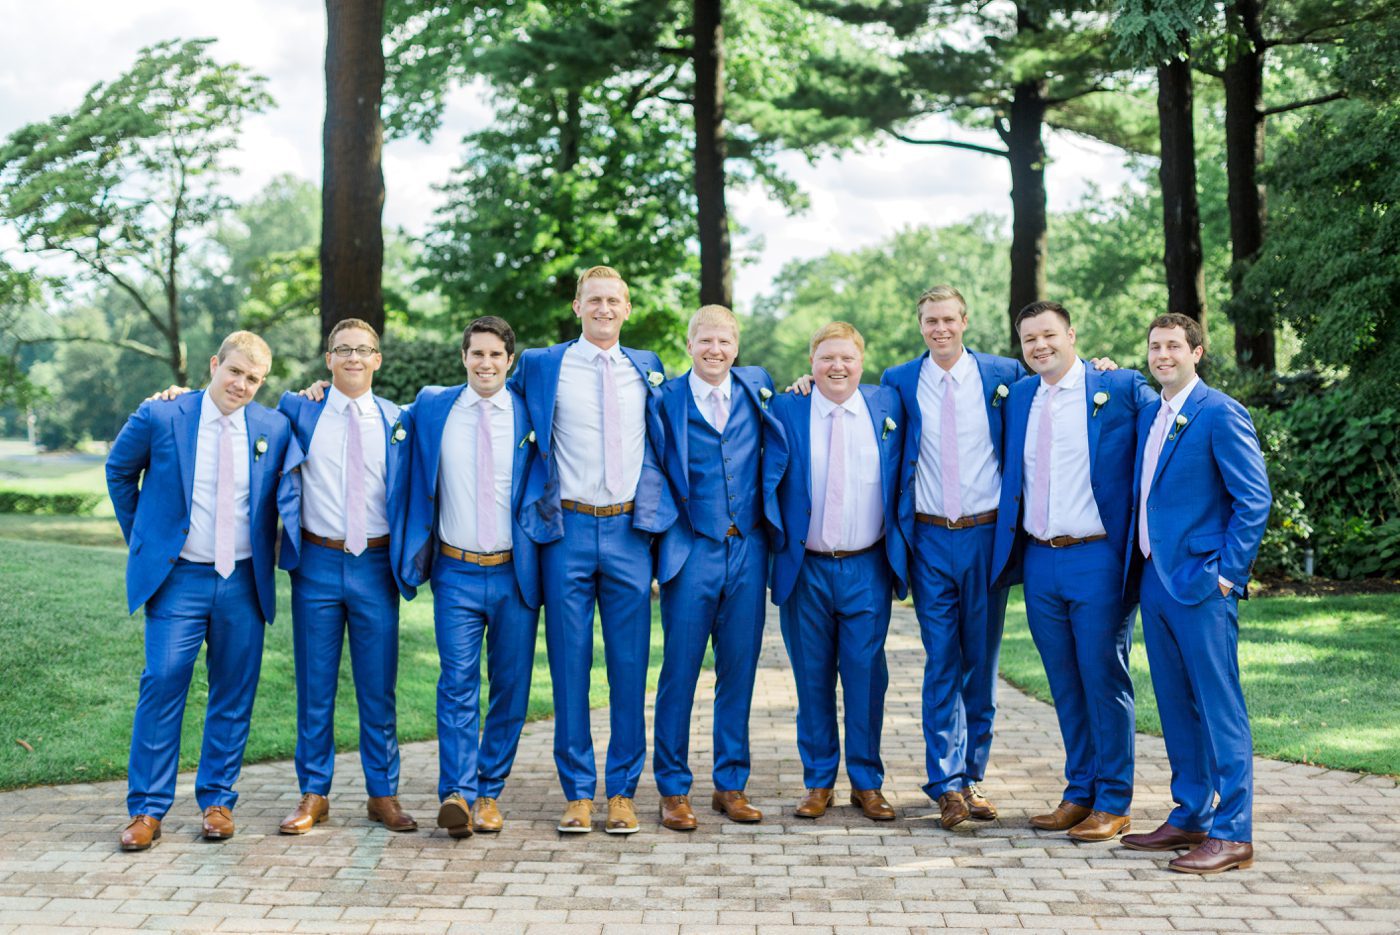 Casual photo of groomsmen